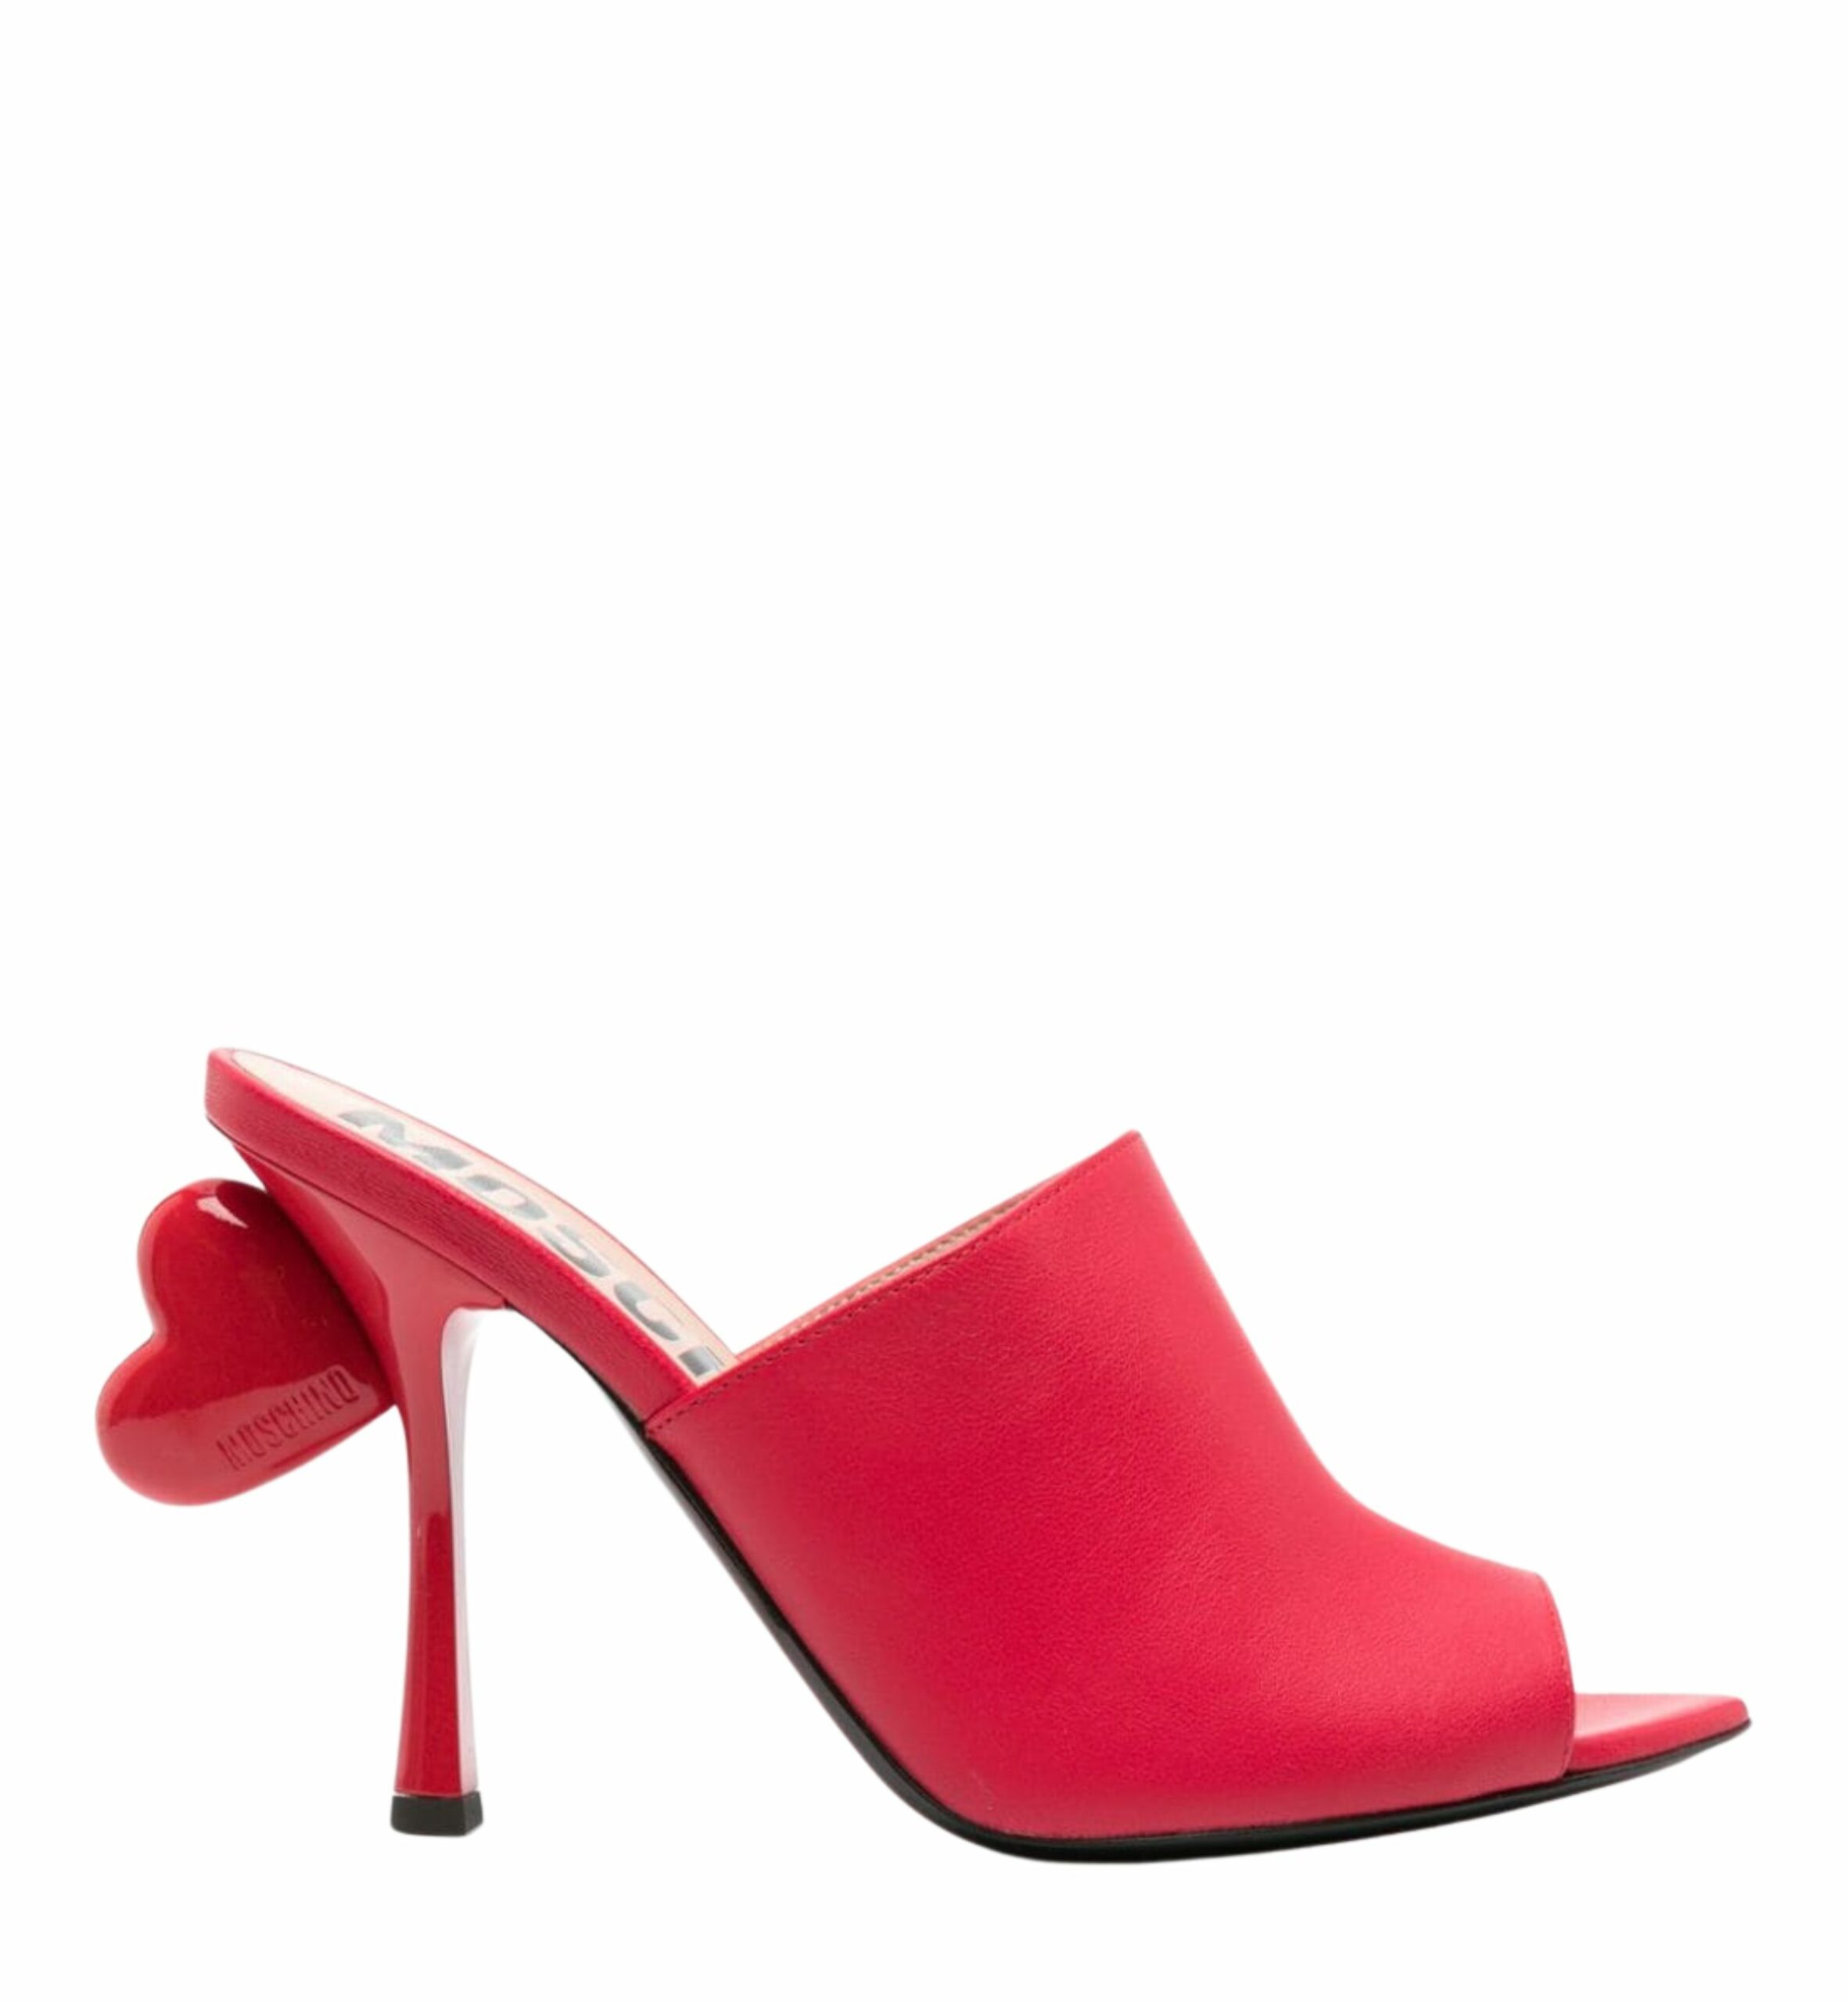 Types of heels every woman should own | Galeri disiarkan oleh ArianaC. |  Lemon8